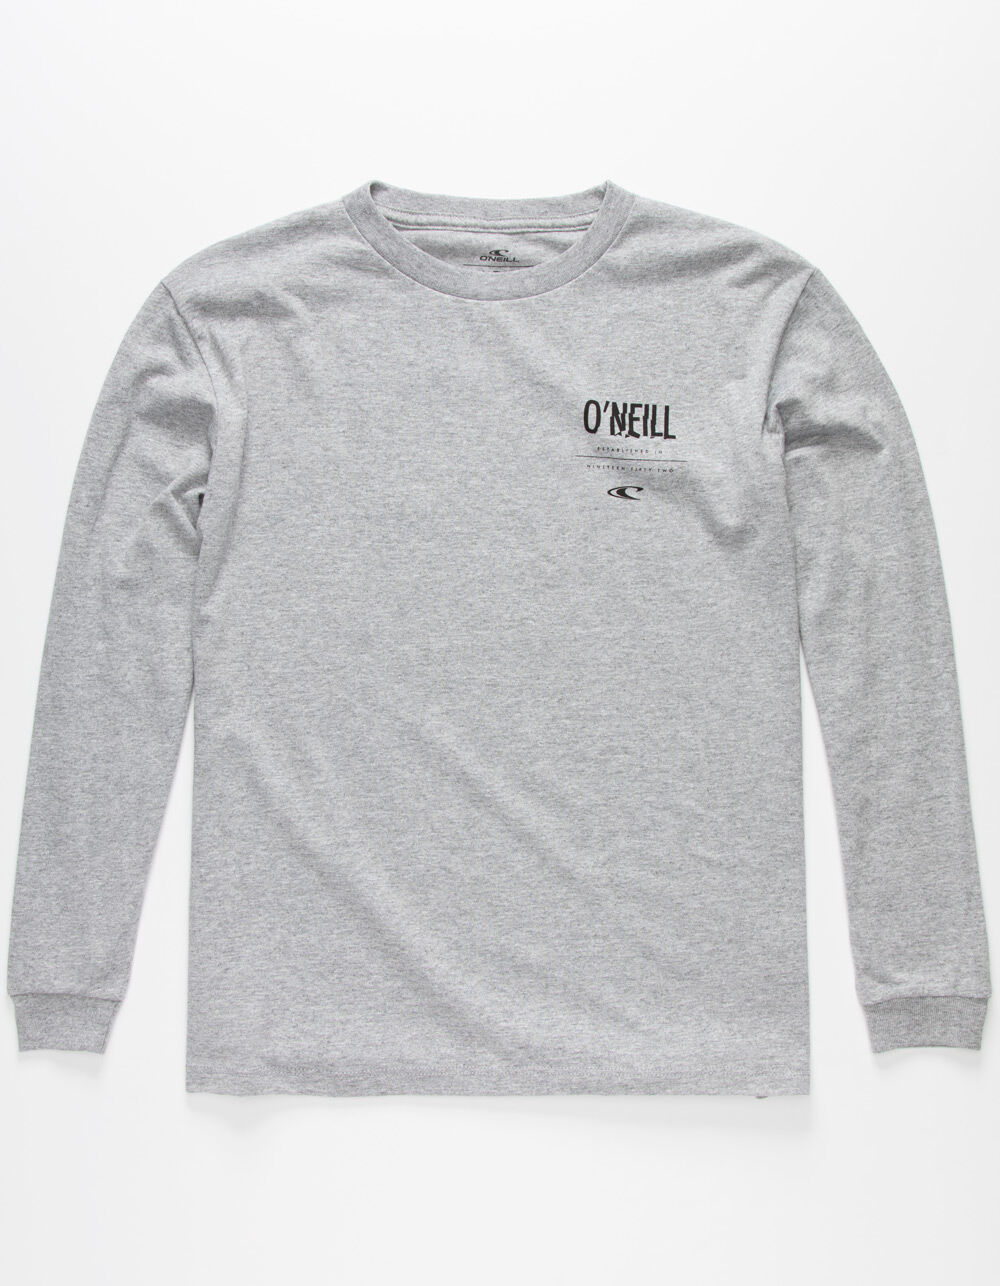 O'NEILL Worked Boys T-Shirt - HEATHER GREY | Tillys